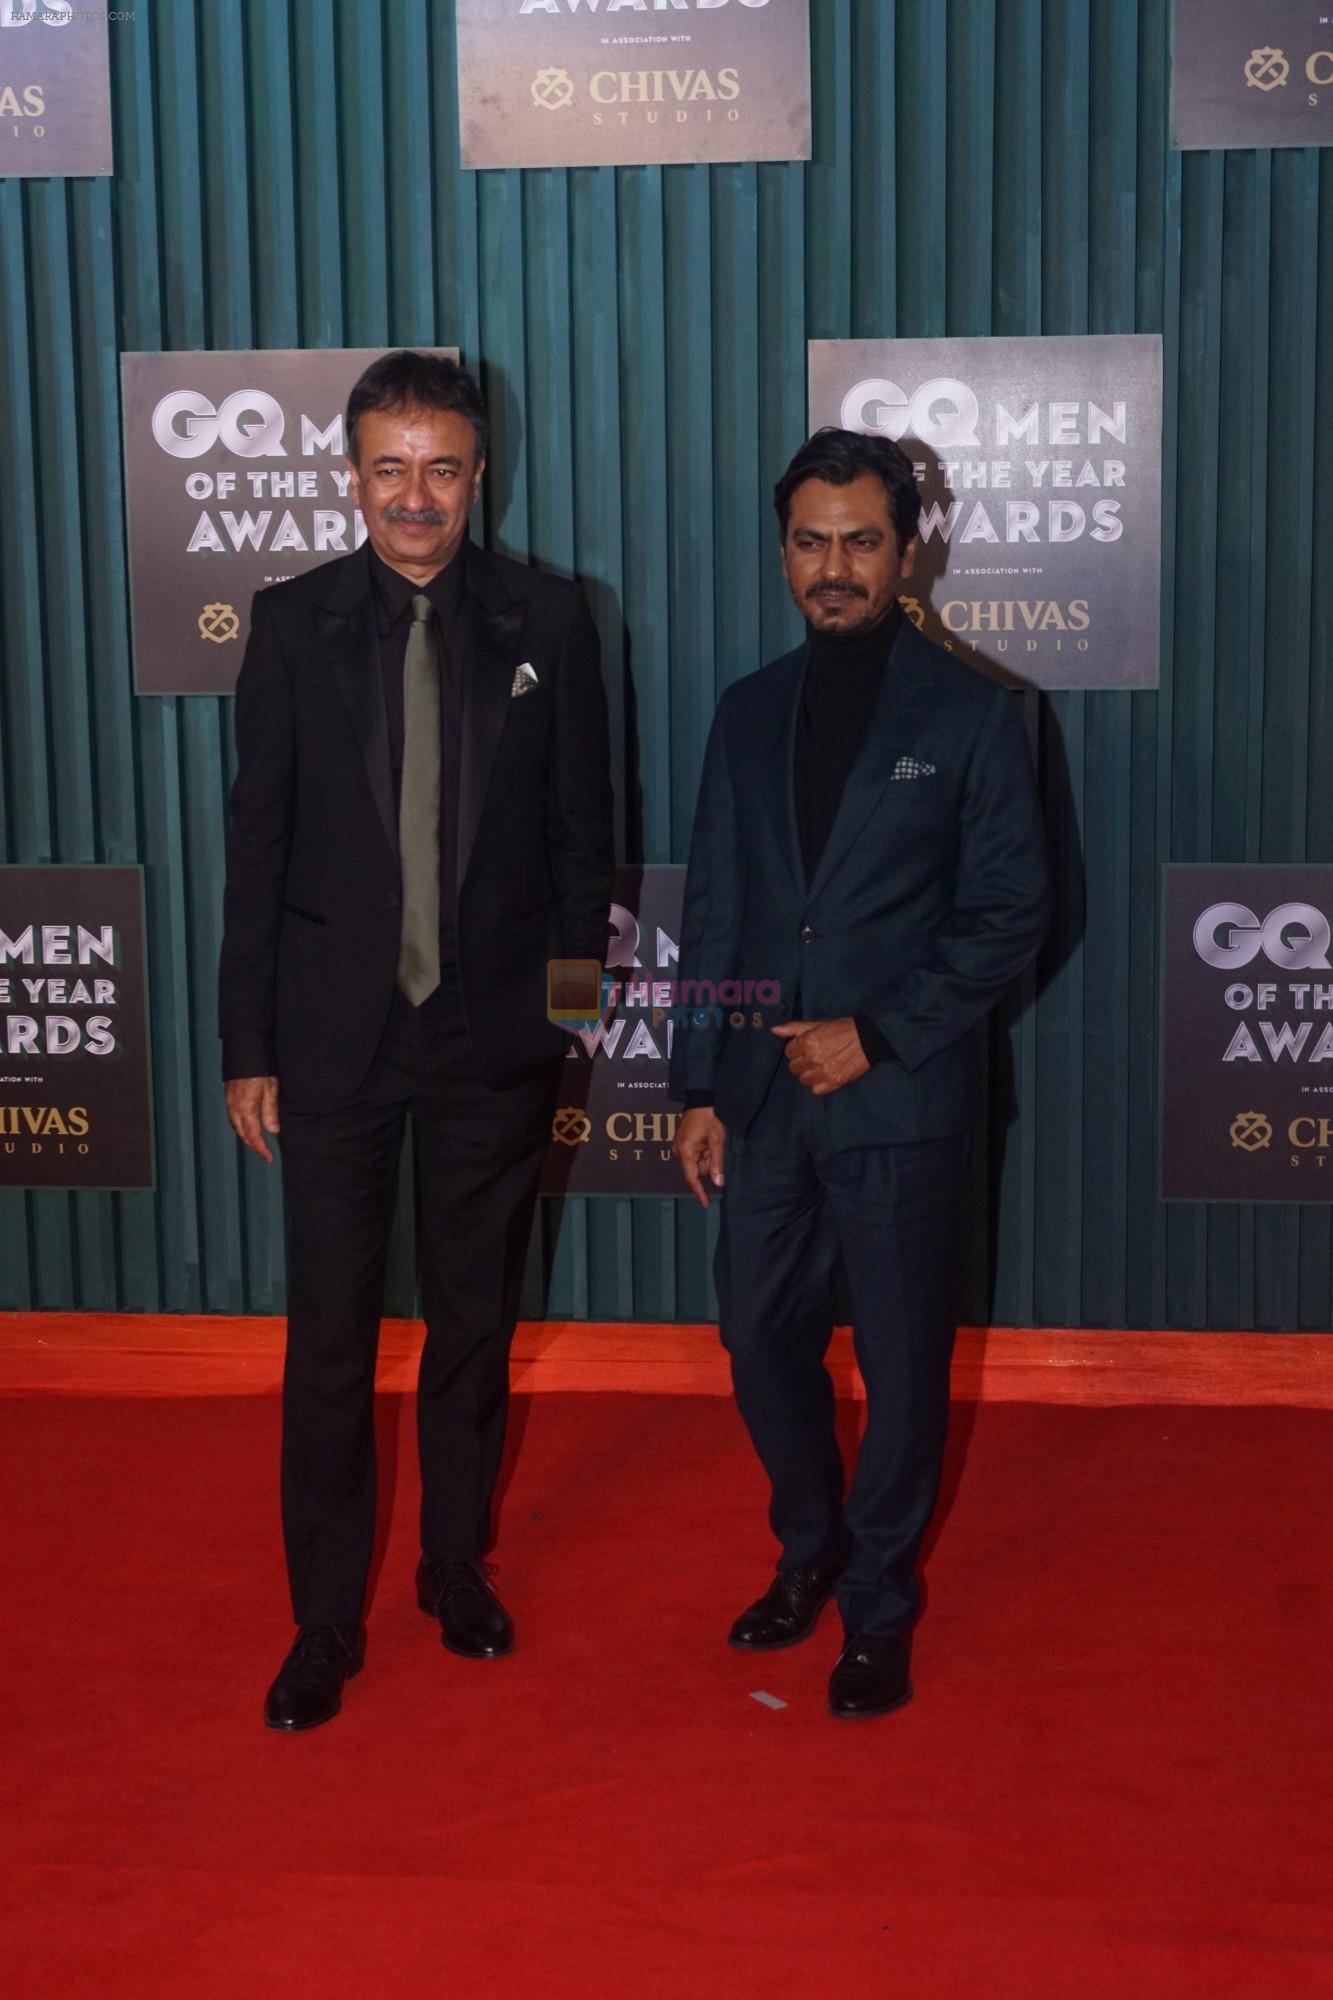 Rajkumar Hirani, Nawazuddin Siddiqui at GQ Men of the Year Awards 2018 on 27th Sept 2018